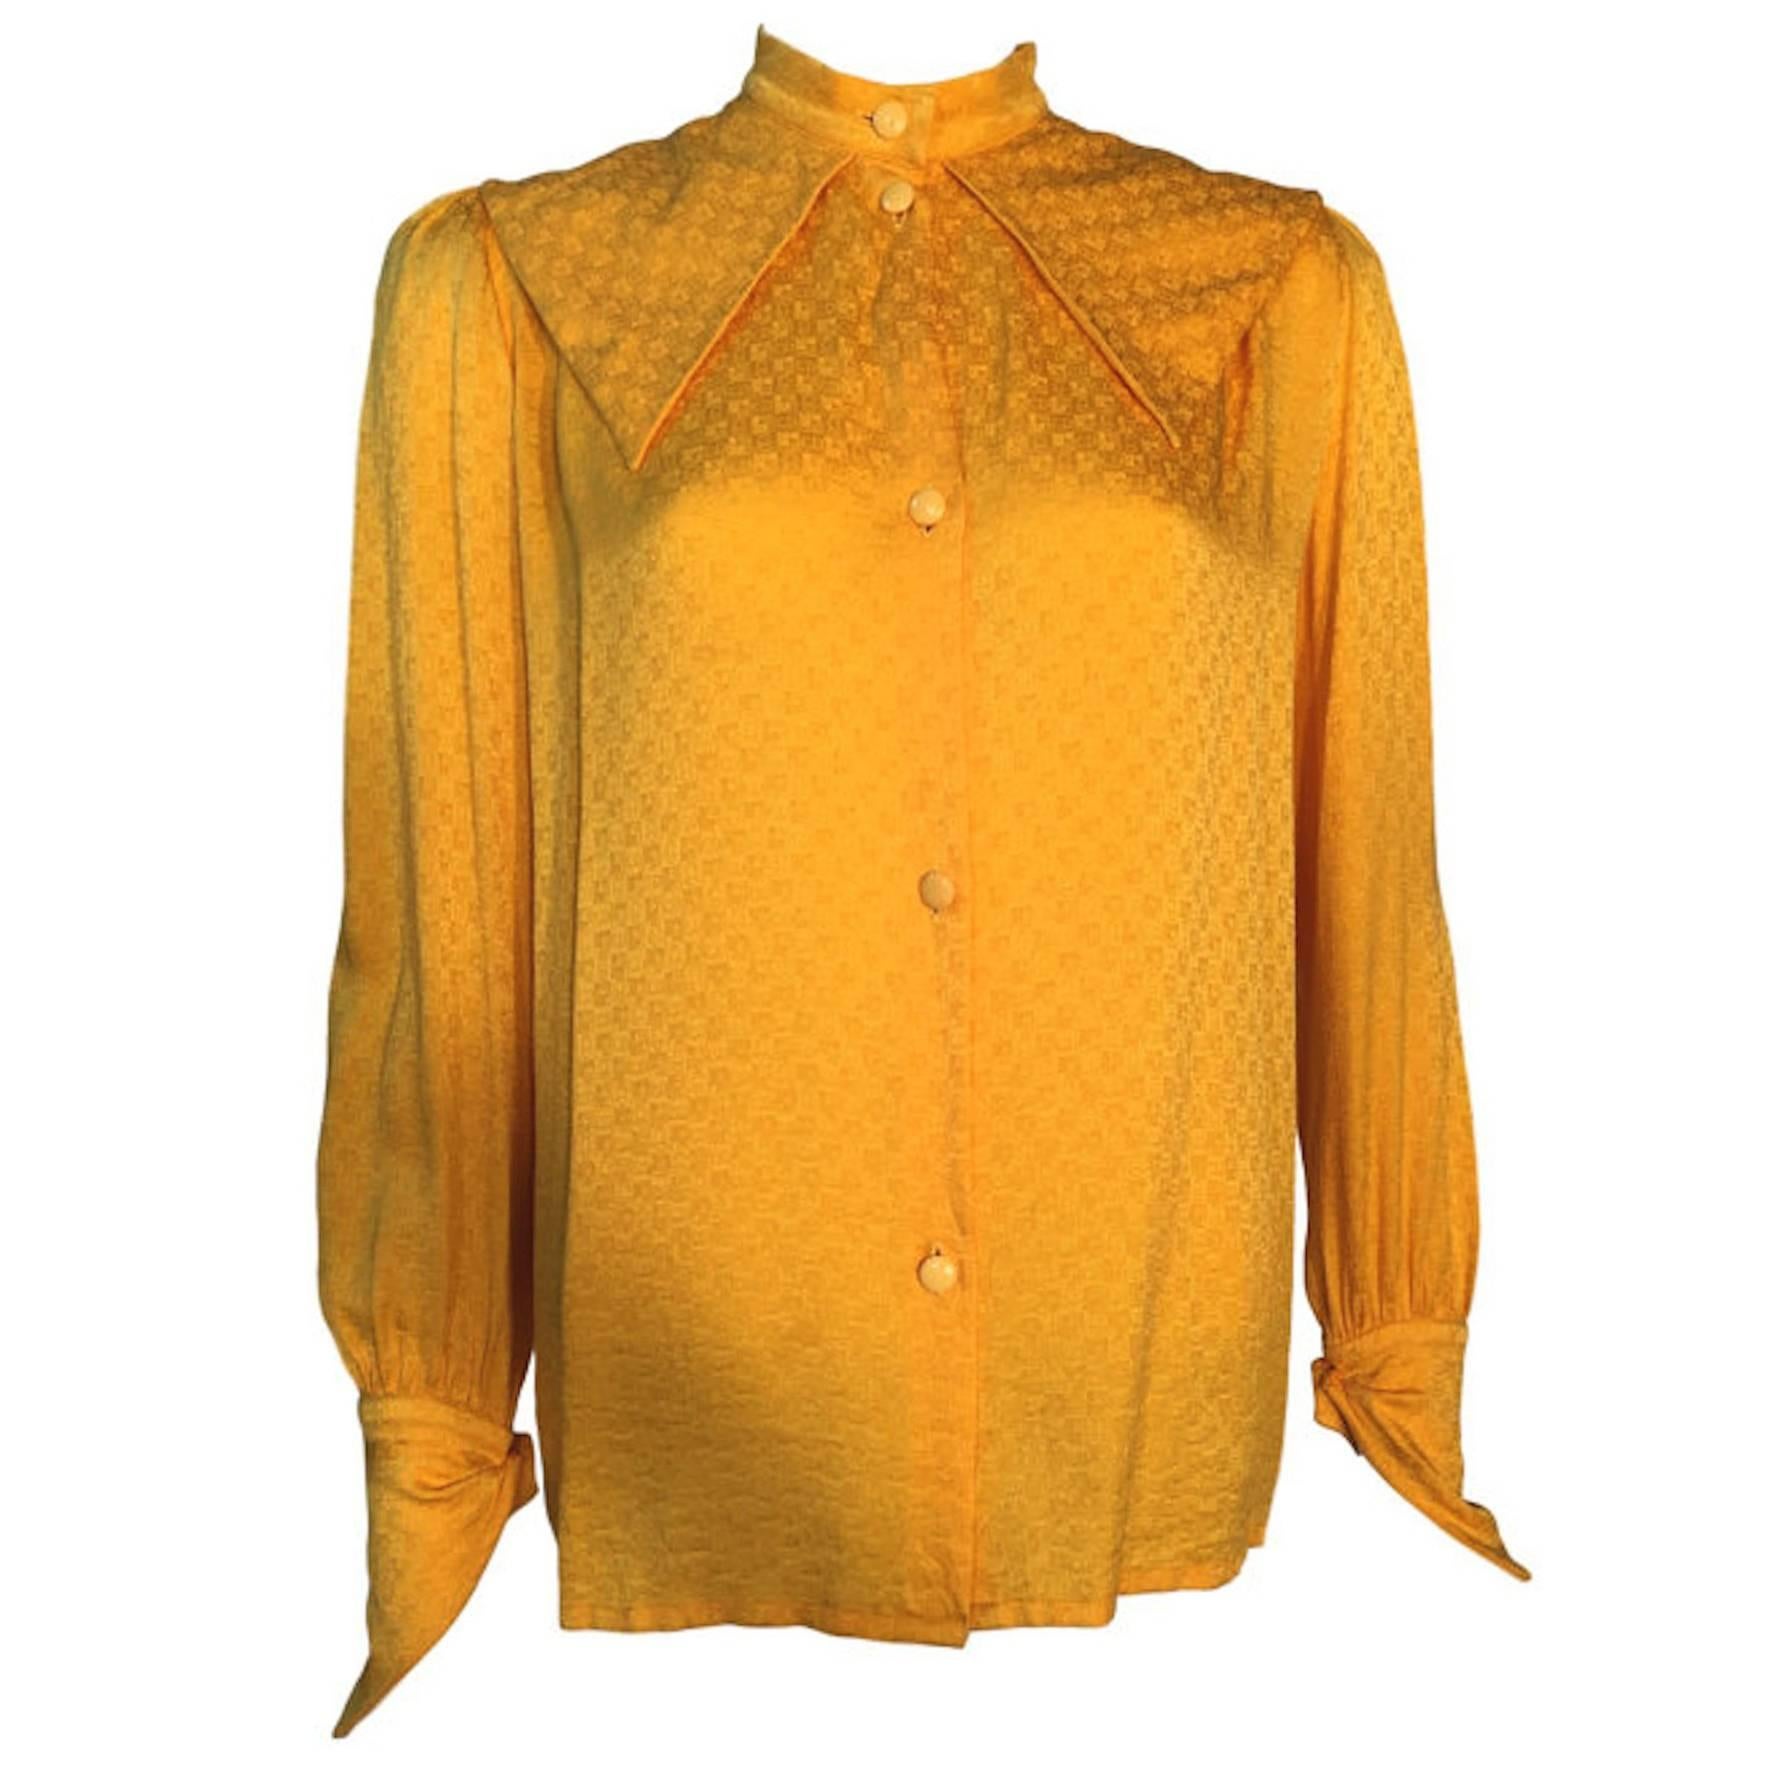 Christian Dior 1970s vintage 100% Silk Monogrammed Blouse Shirt UK 10